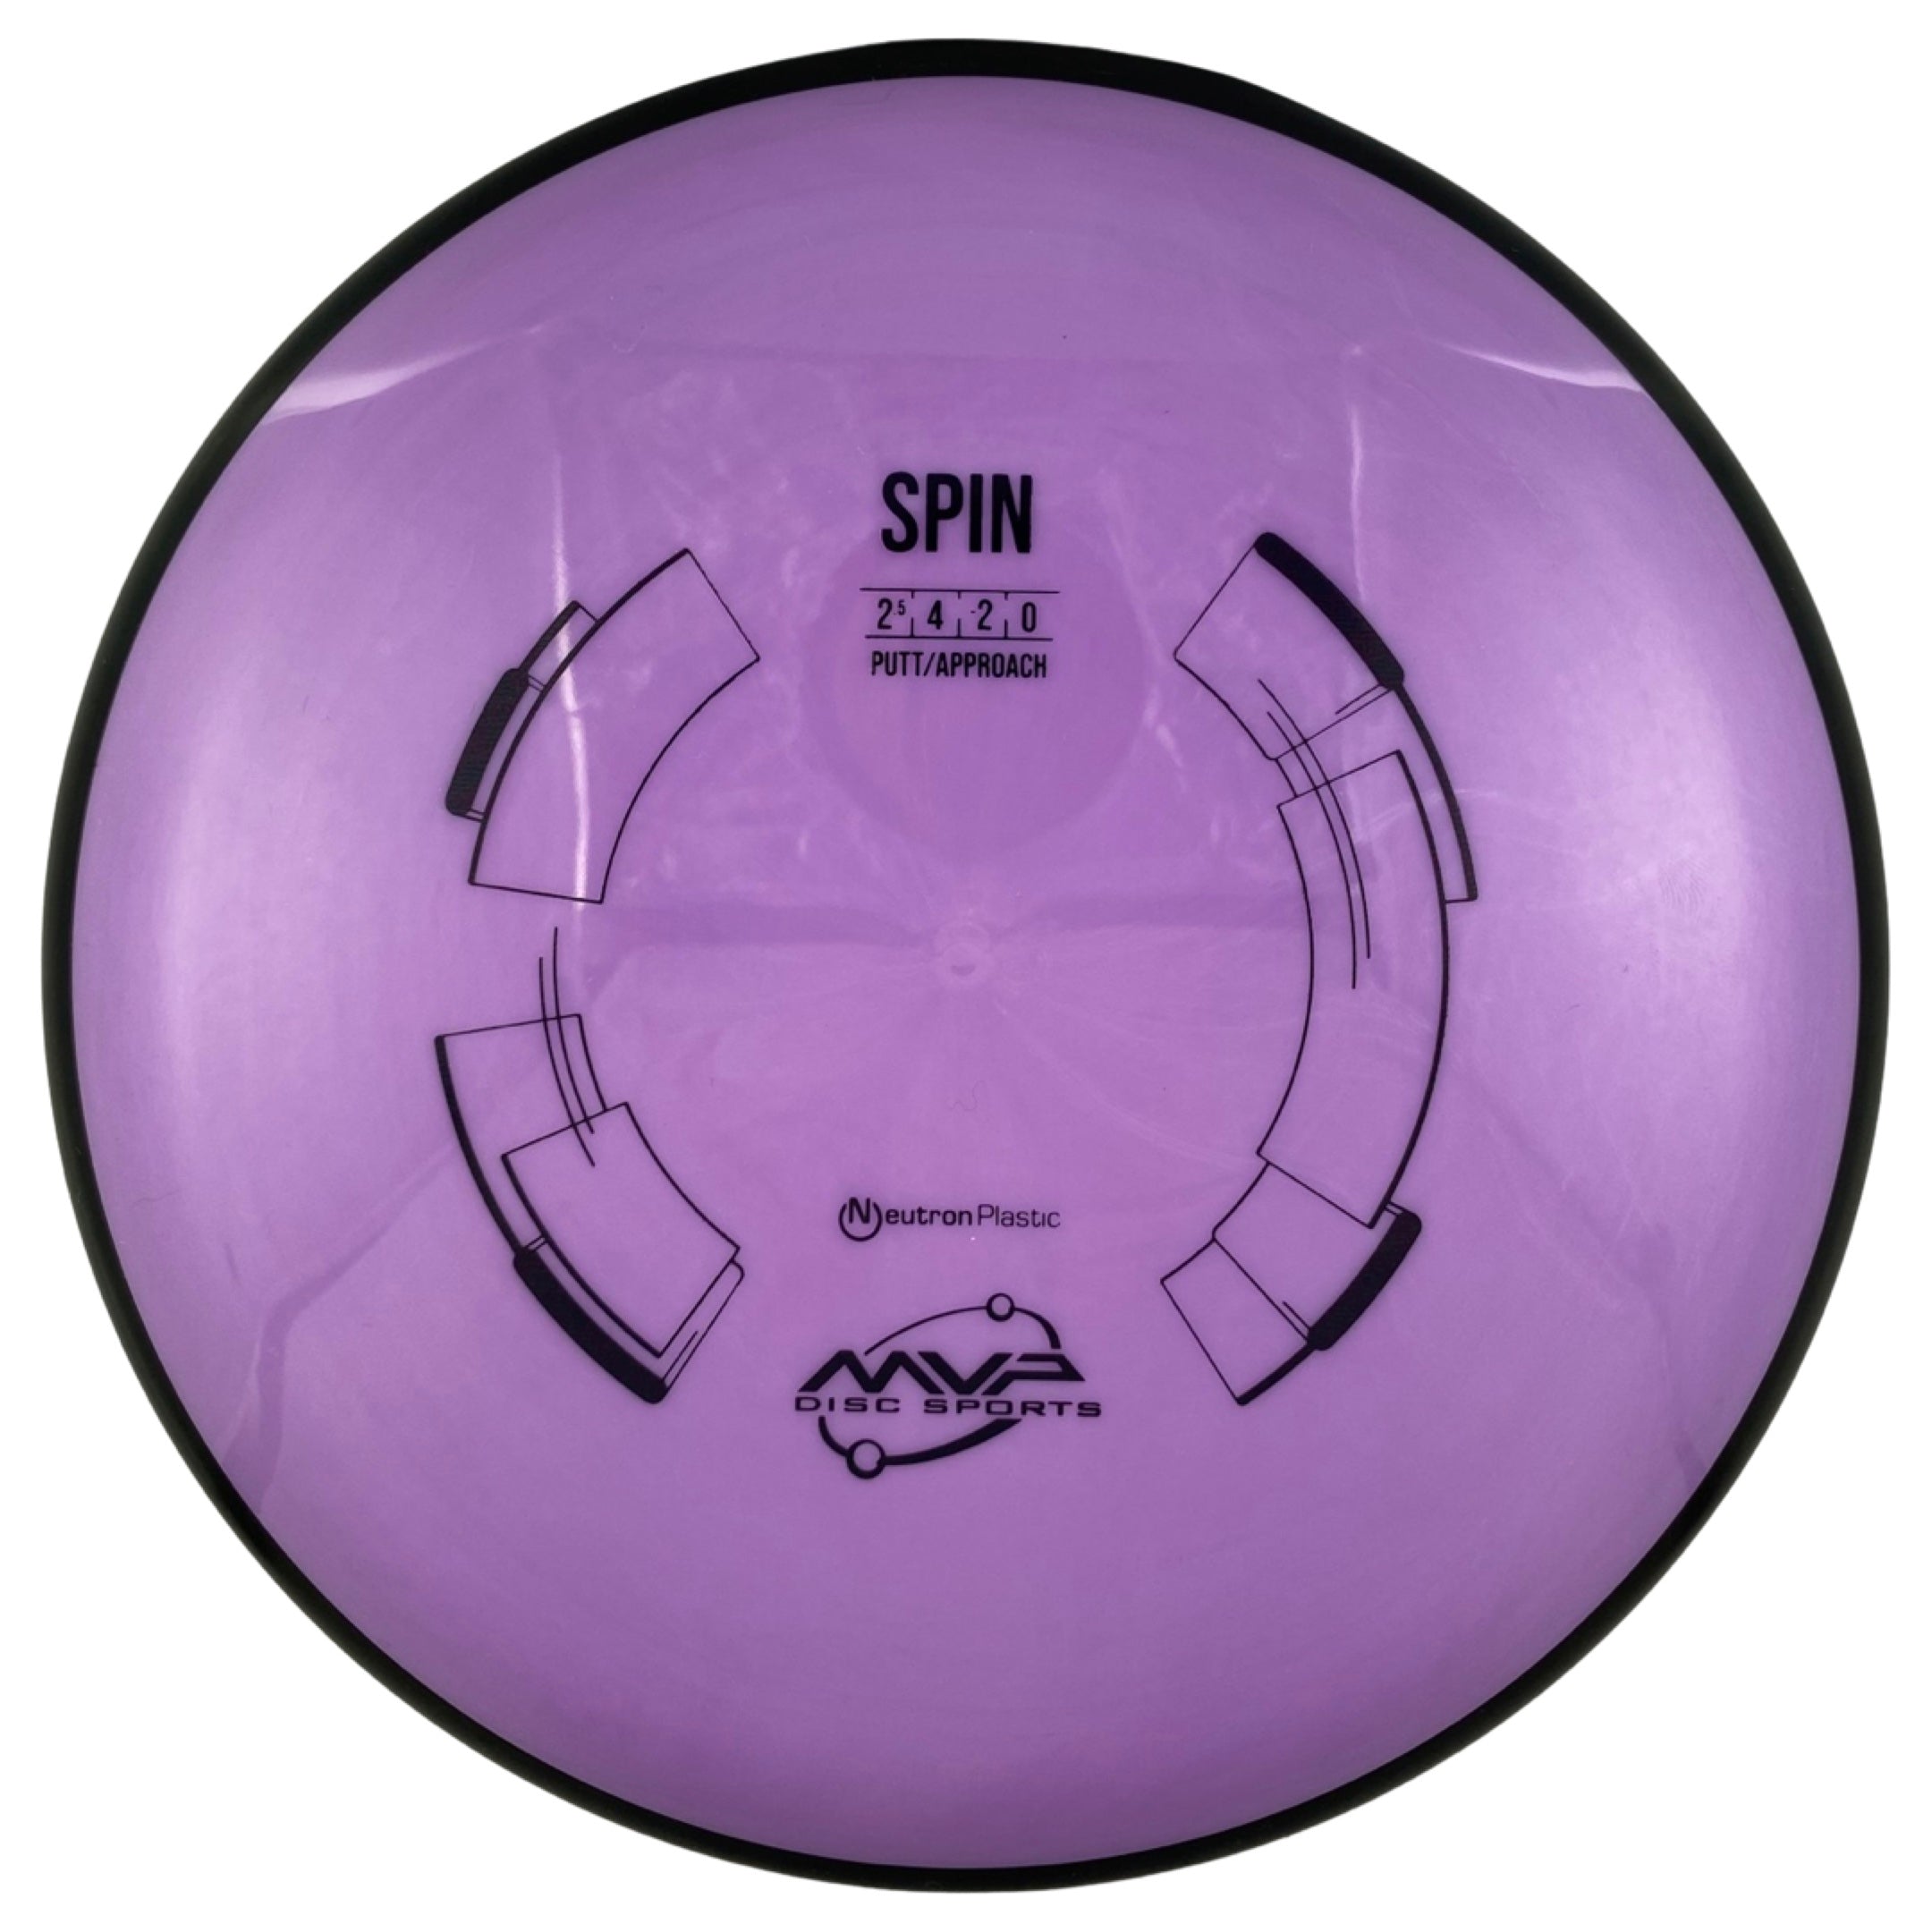 MVP Spin - Neutron